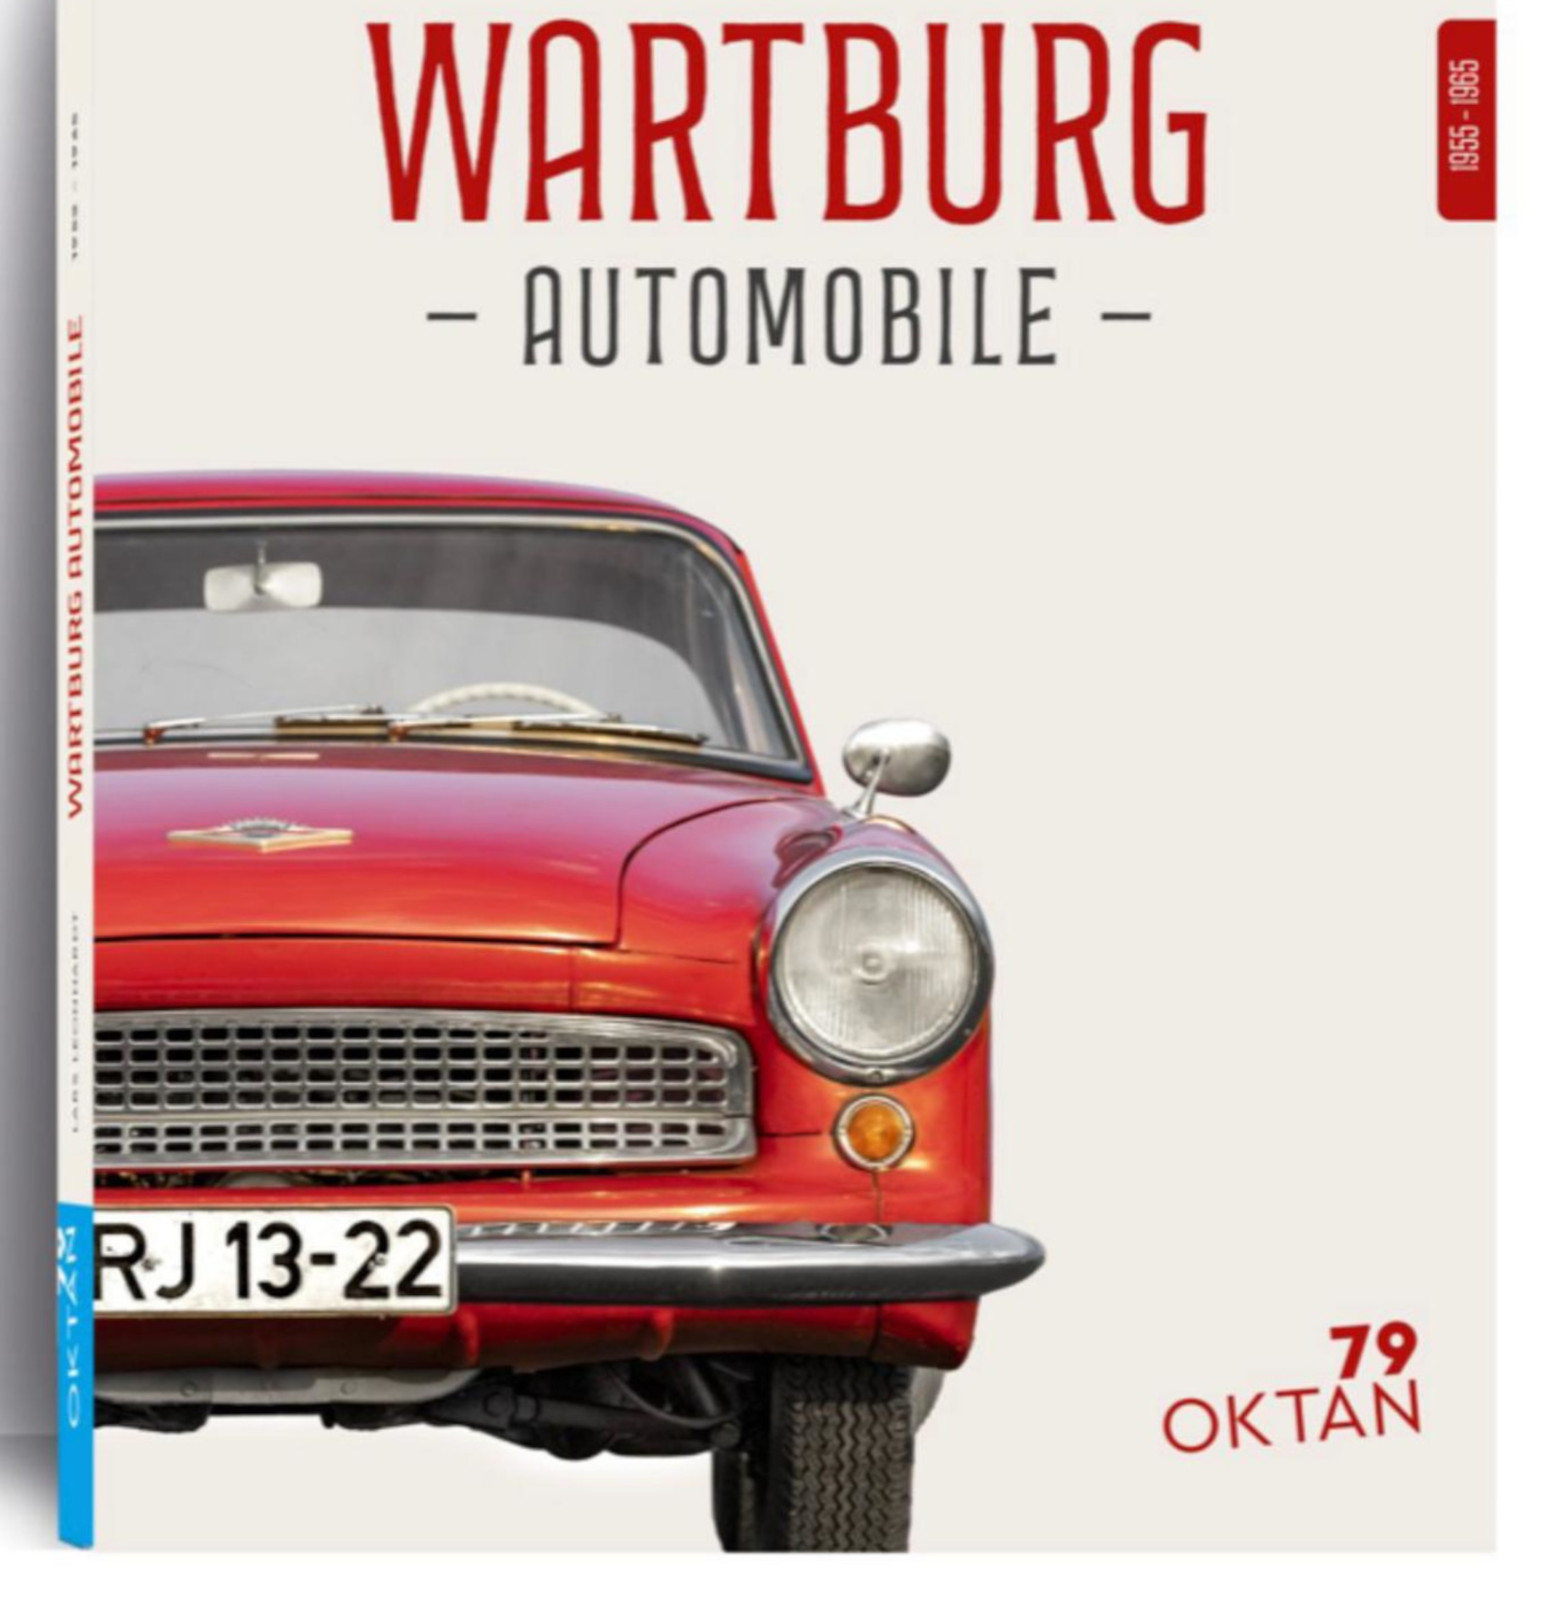 Cover des Buches "Wartburg Automobile", Foto: 79oktan